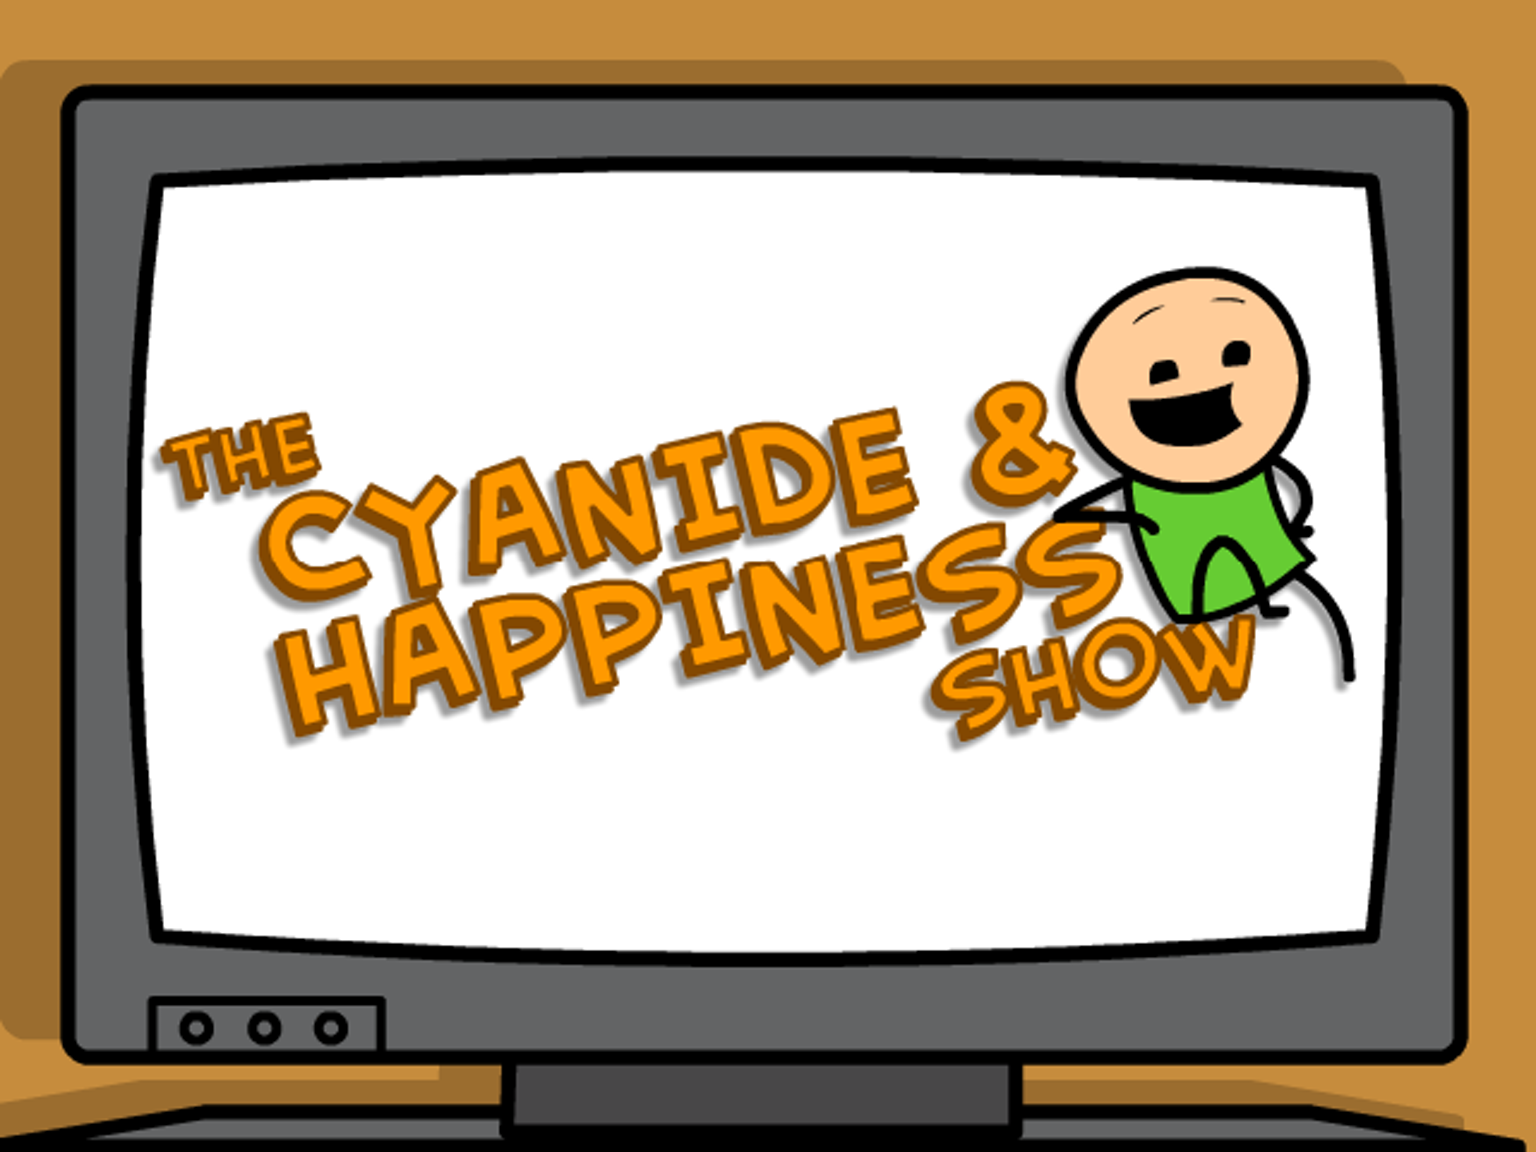 The Cyanide & Happiness Show: Season 1